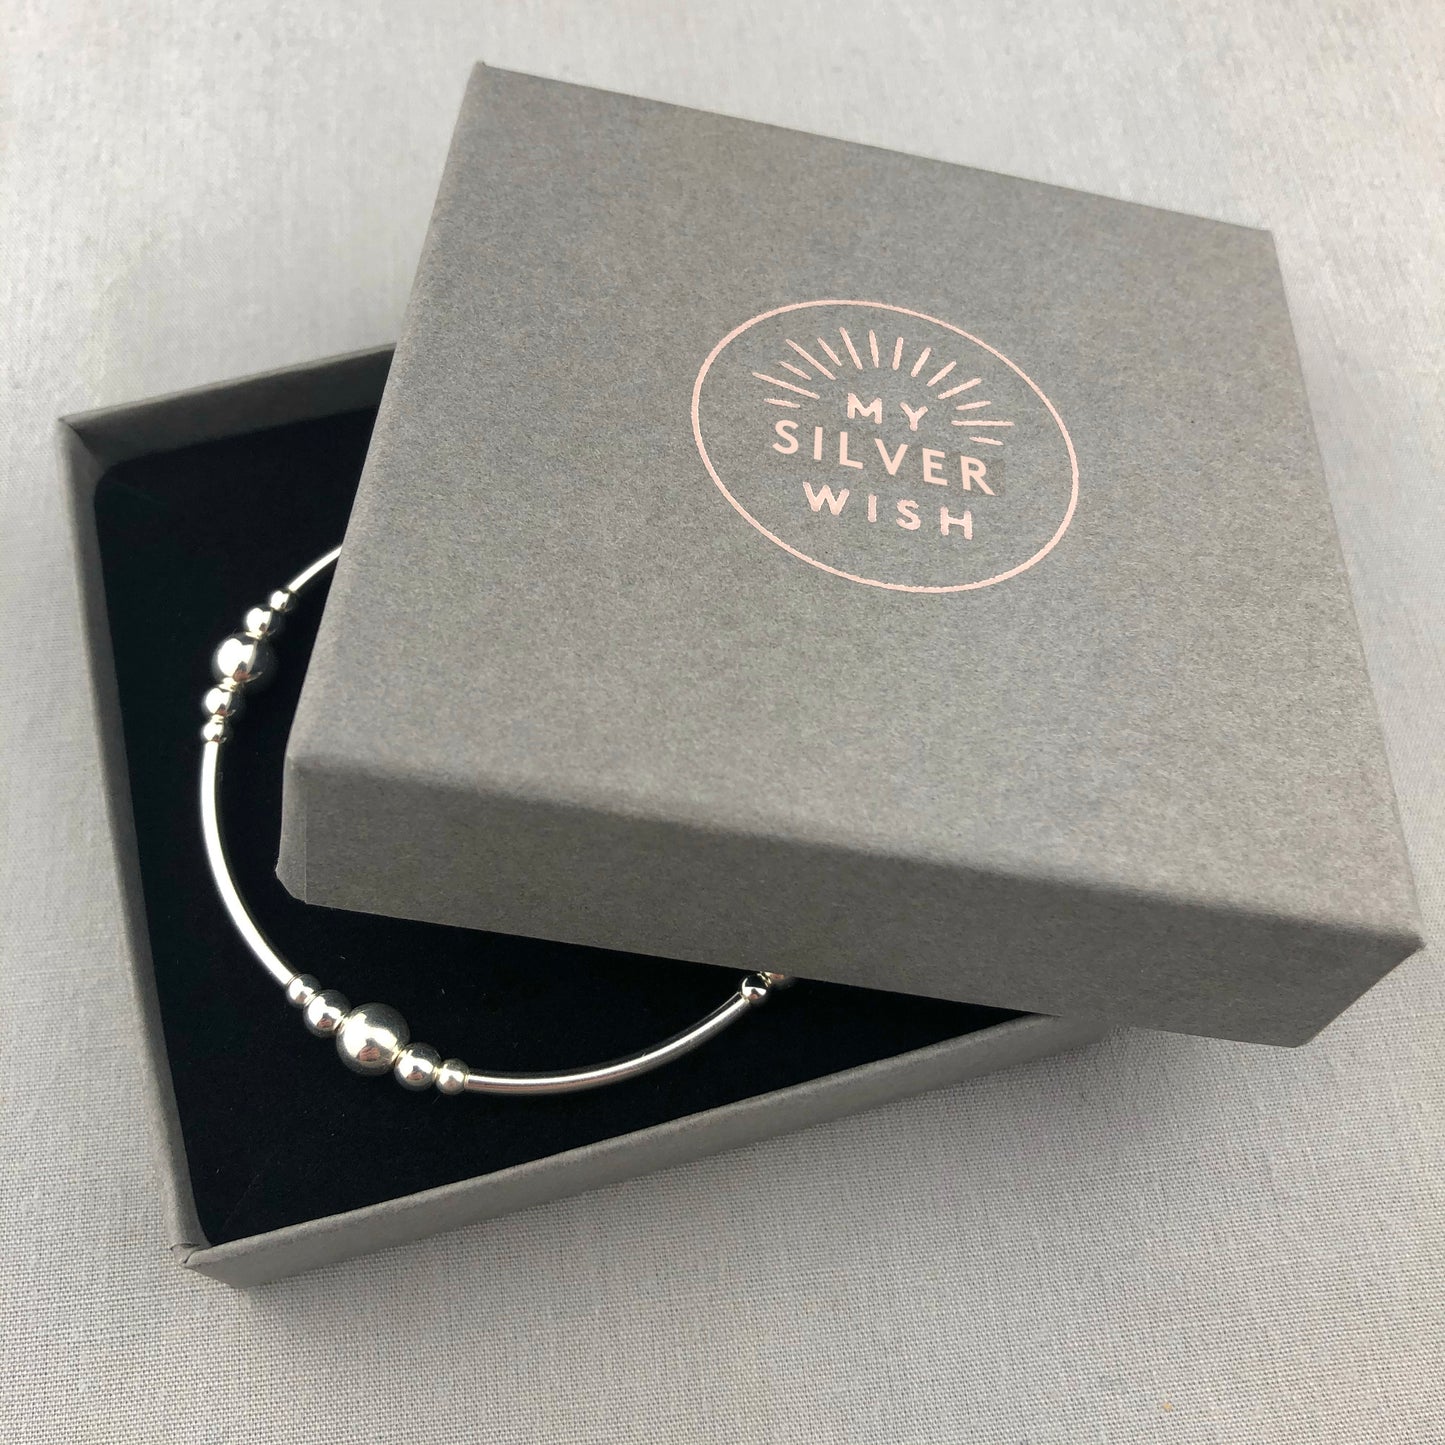 My Silver Wish Gift Box with charm bracelet inside